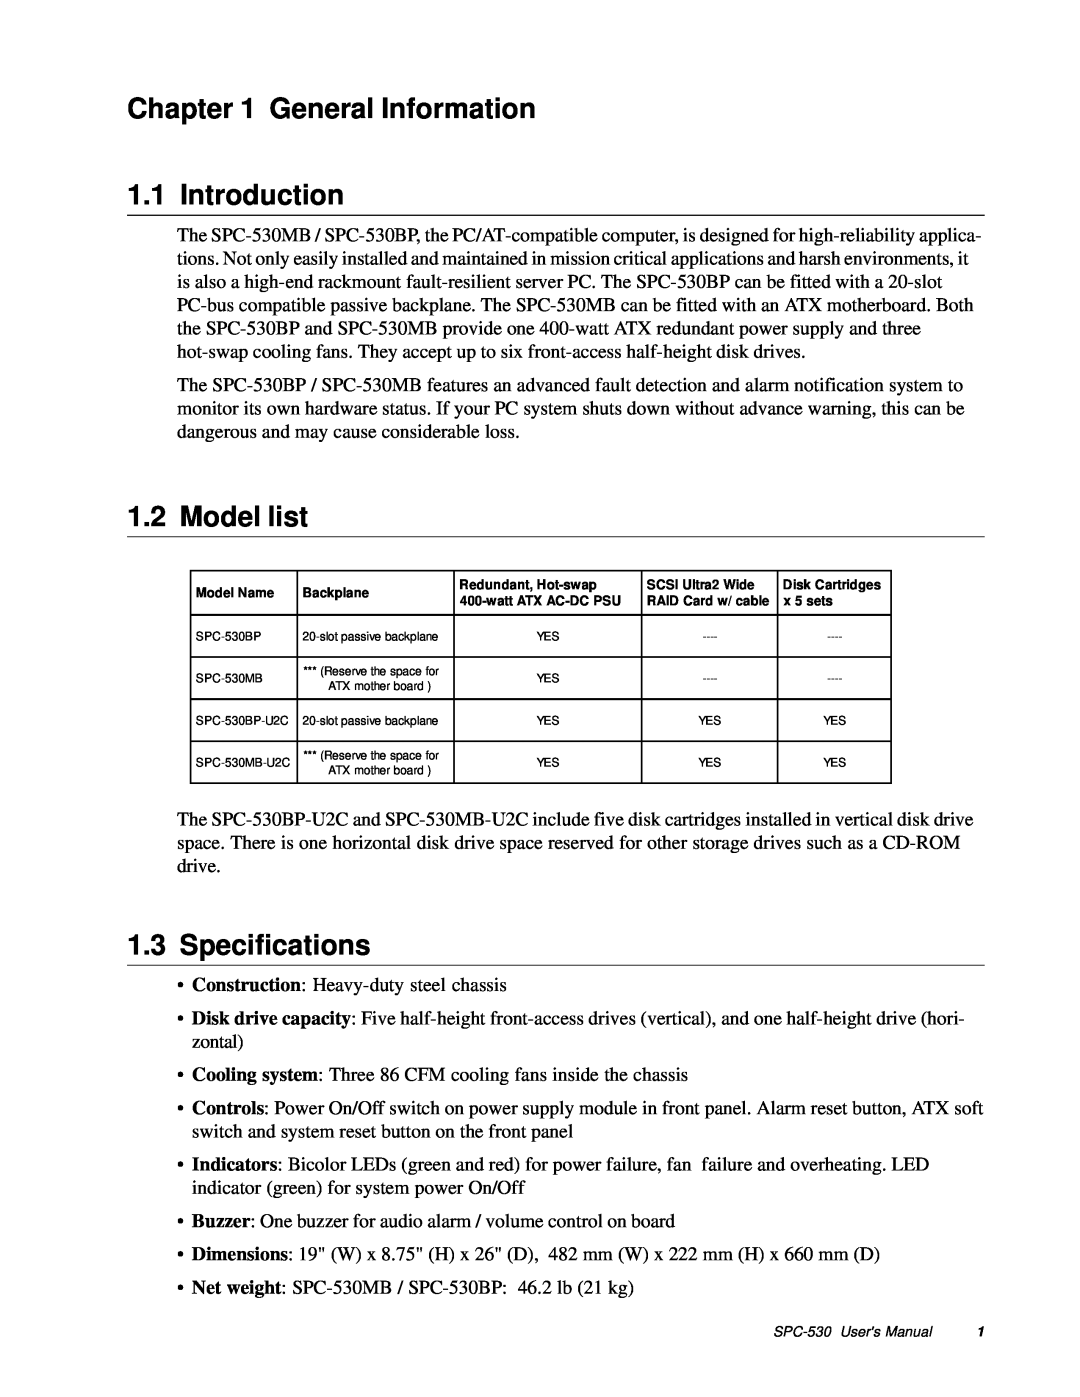 Advantech SPC-530 user manual General Information 1.1 Introduction, Model list, Specifications 